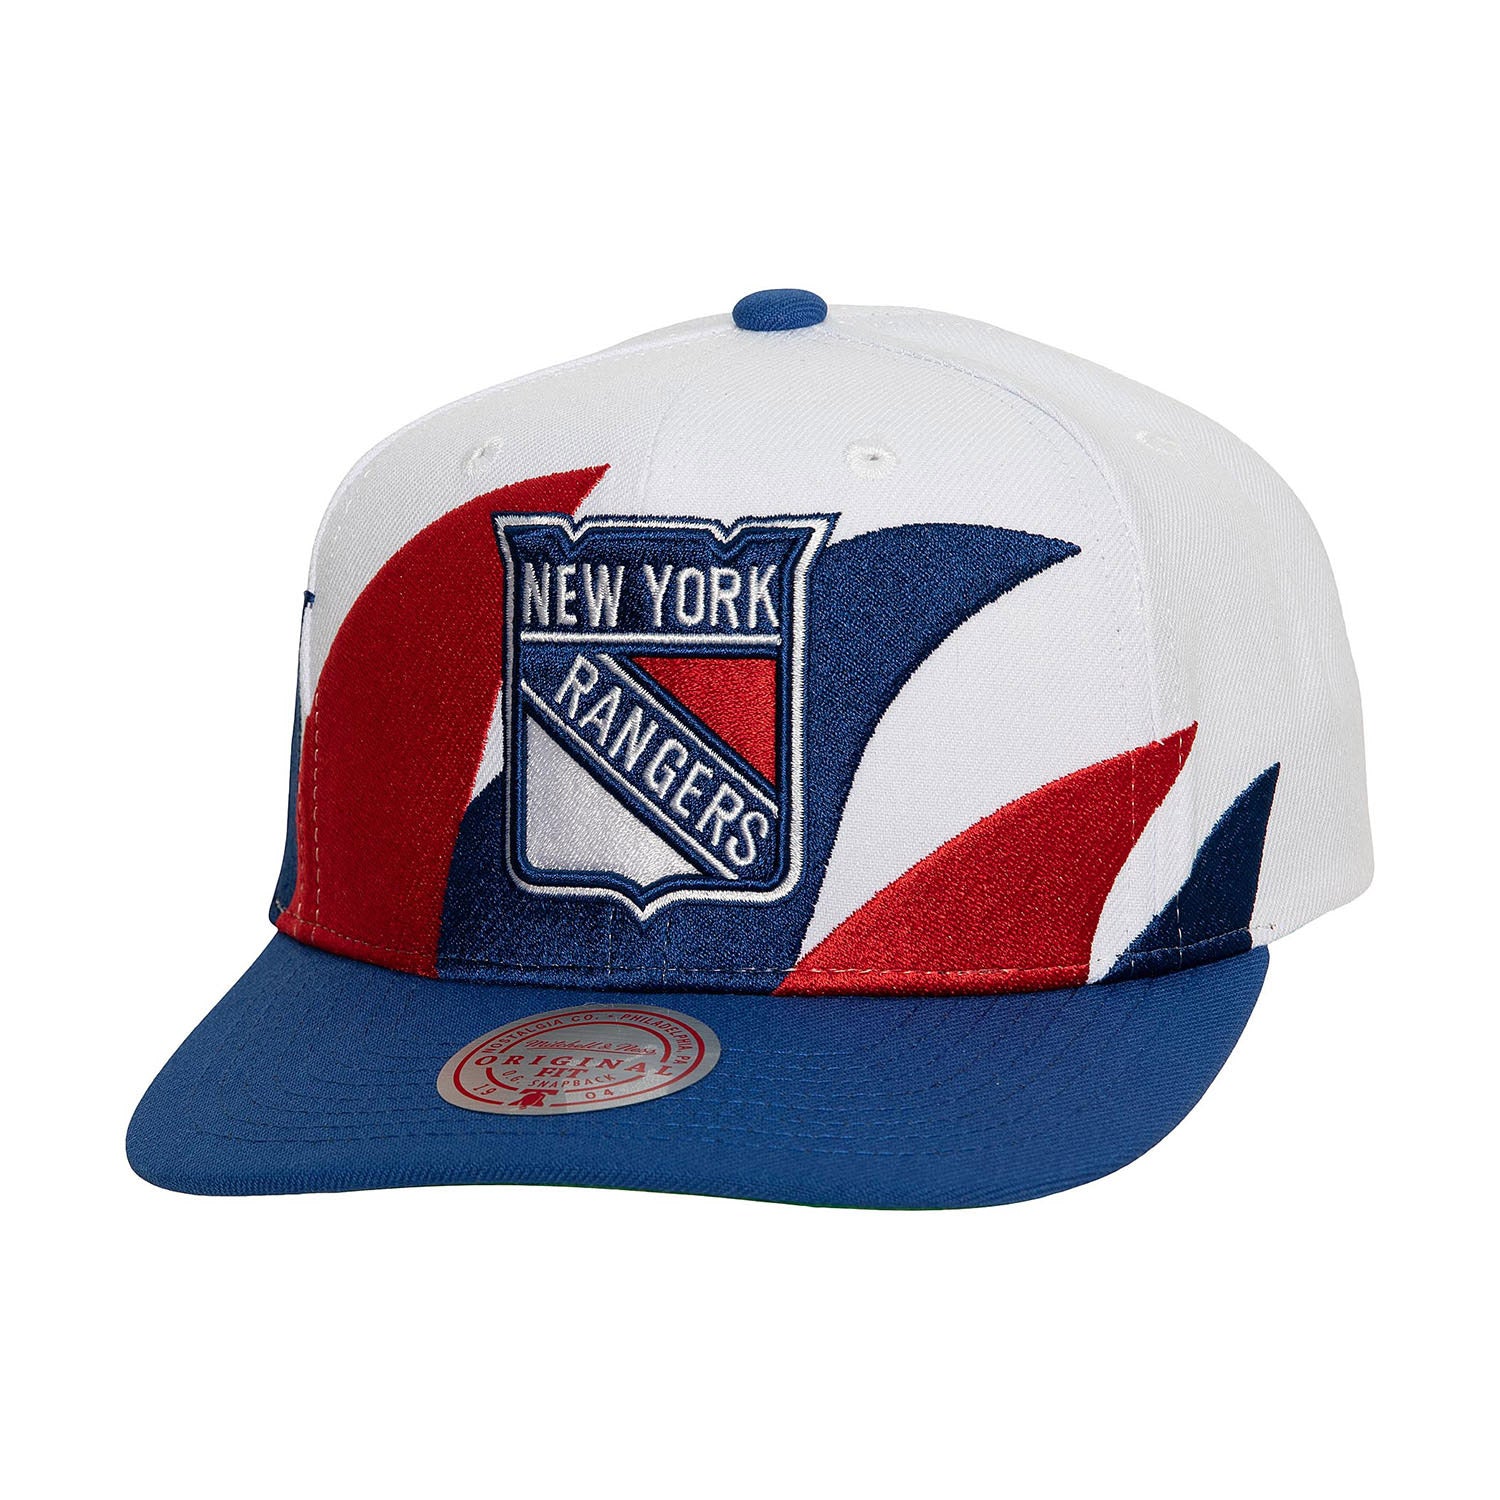 Vintage Competitor Logo 7 New York Knicks Snapback Blue W/ Black Bill Hat  Cap